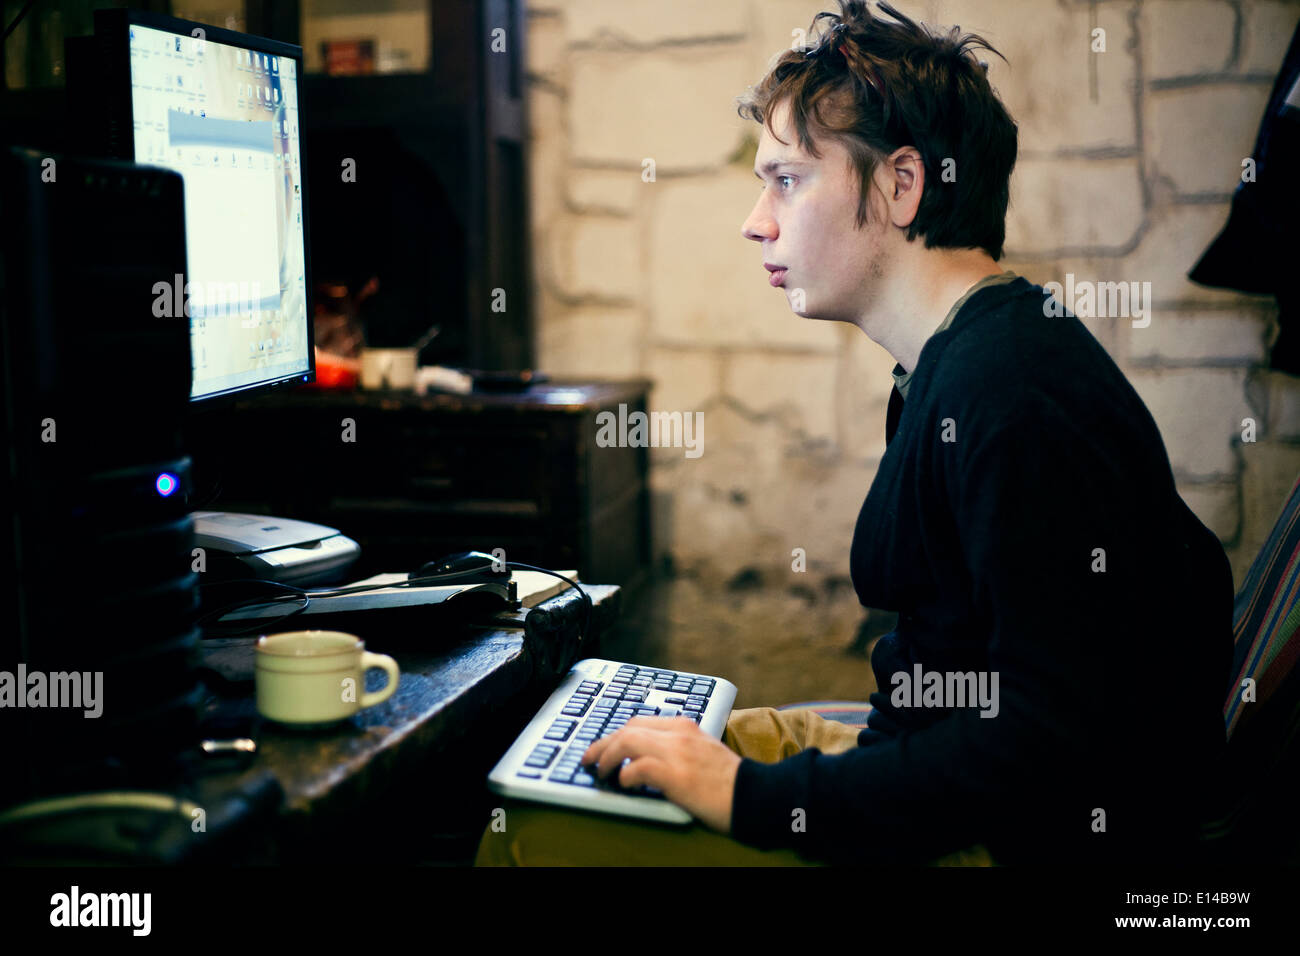 Caucasian man using computer at desk Banque D'Images